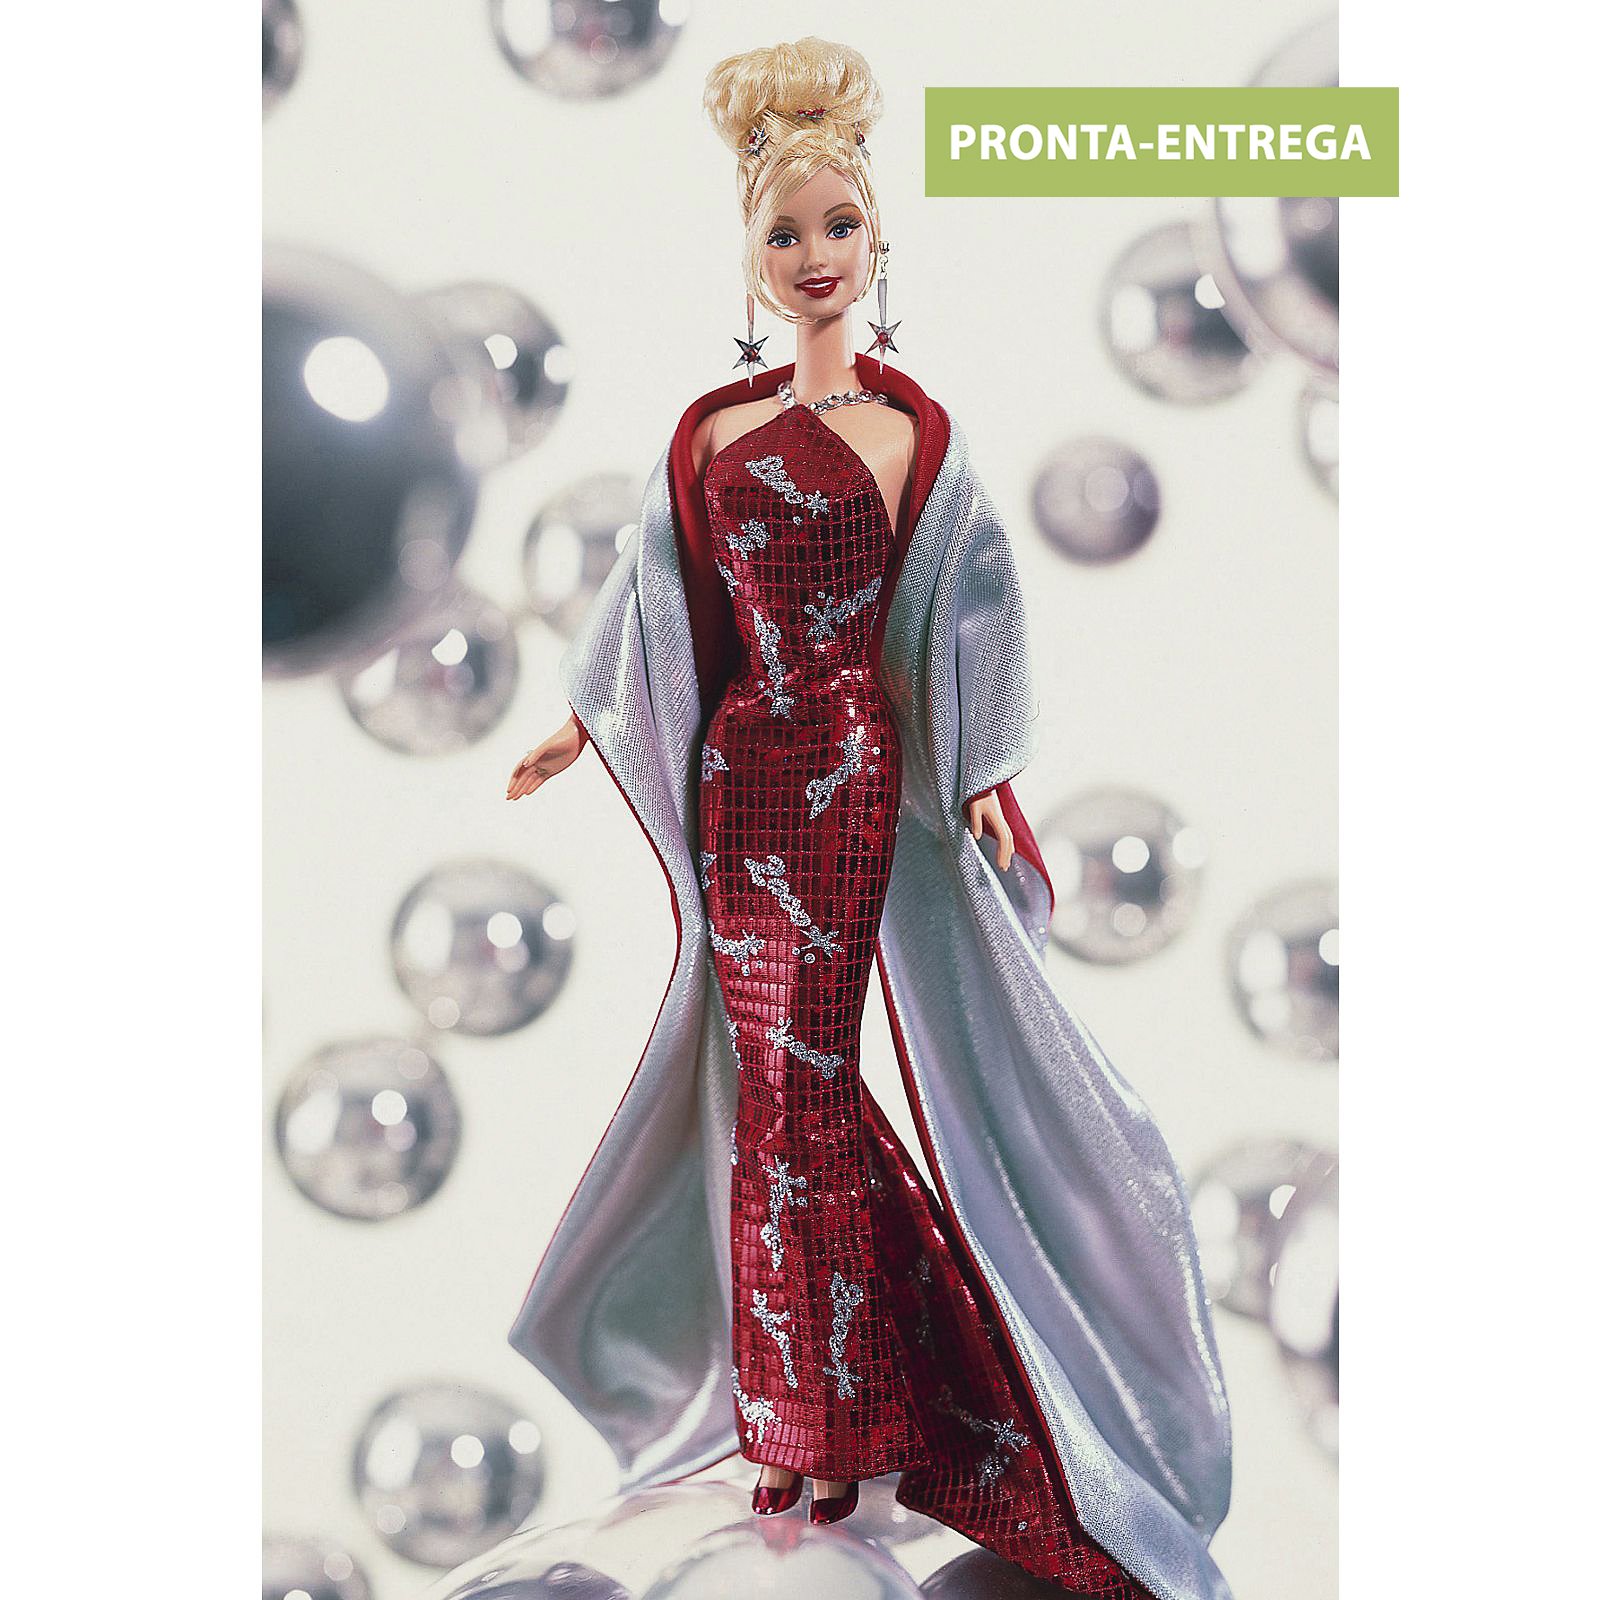 Boneca Barbie Collector 2000 - Mattel